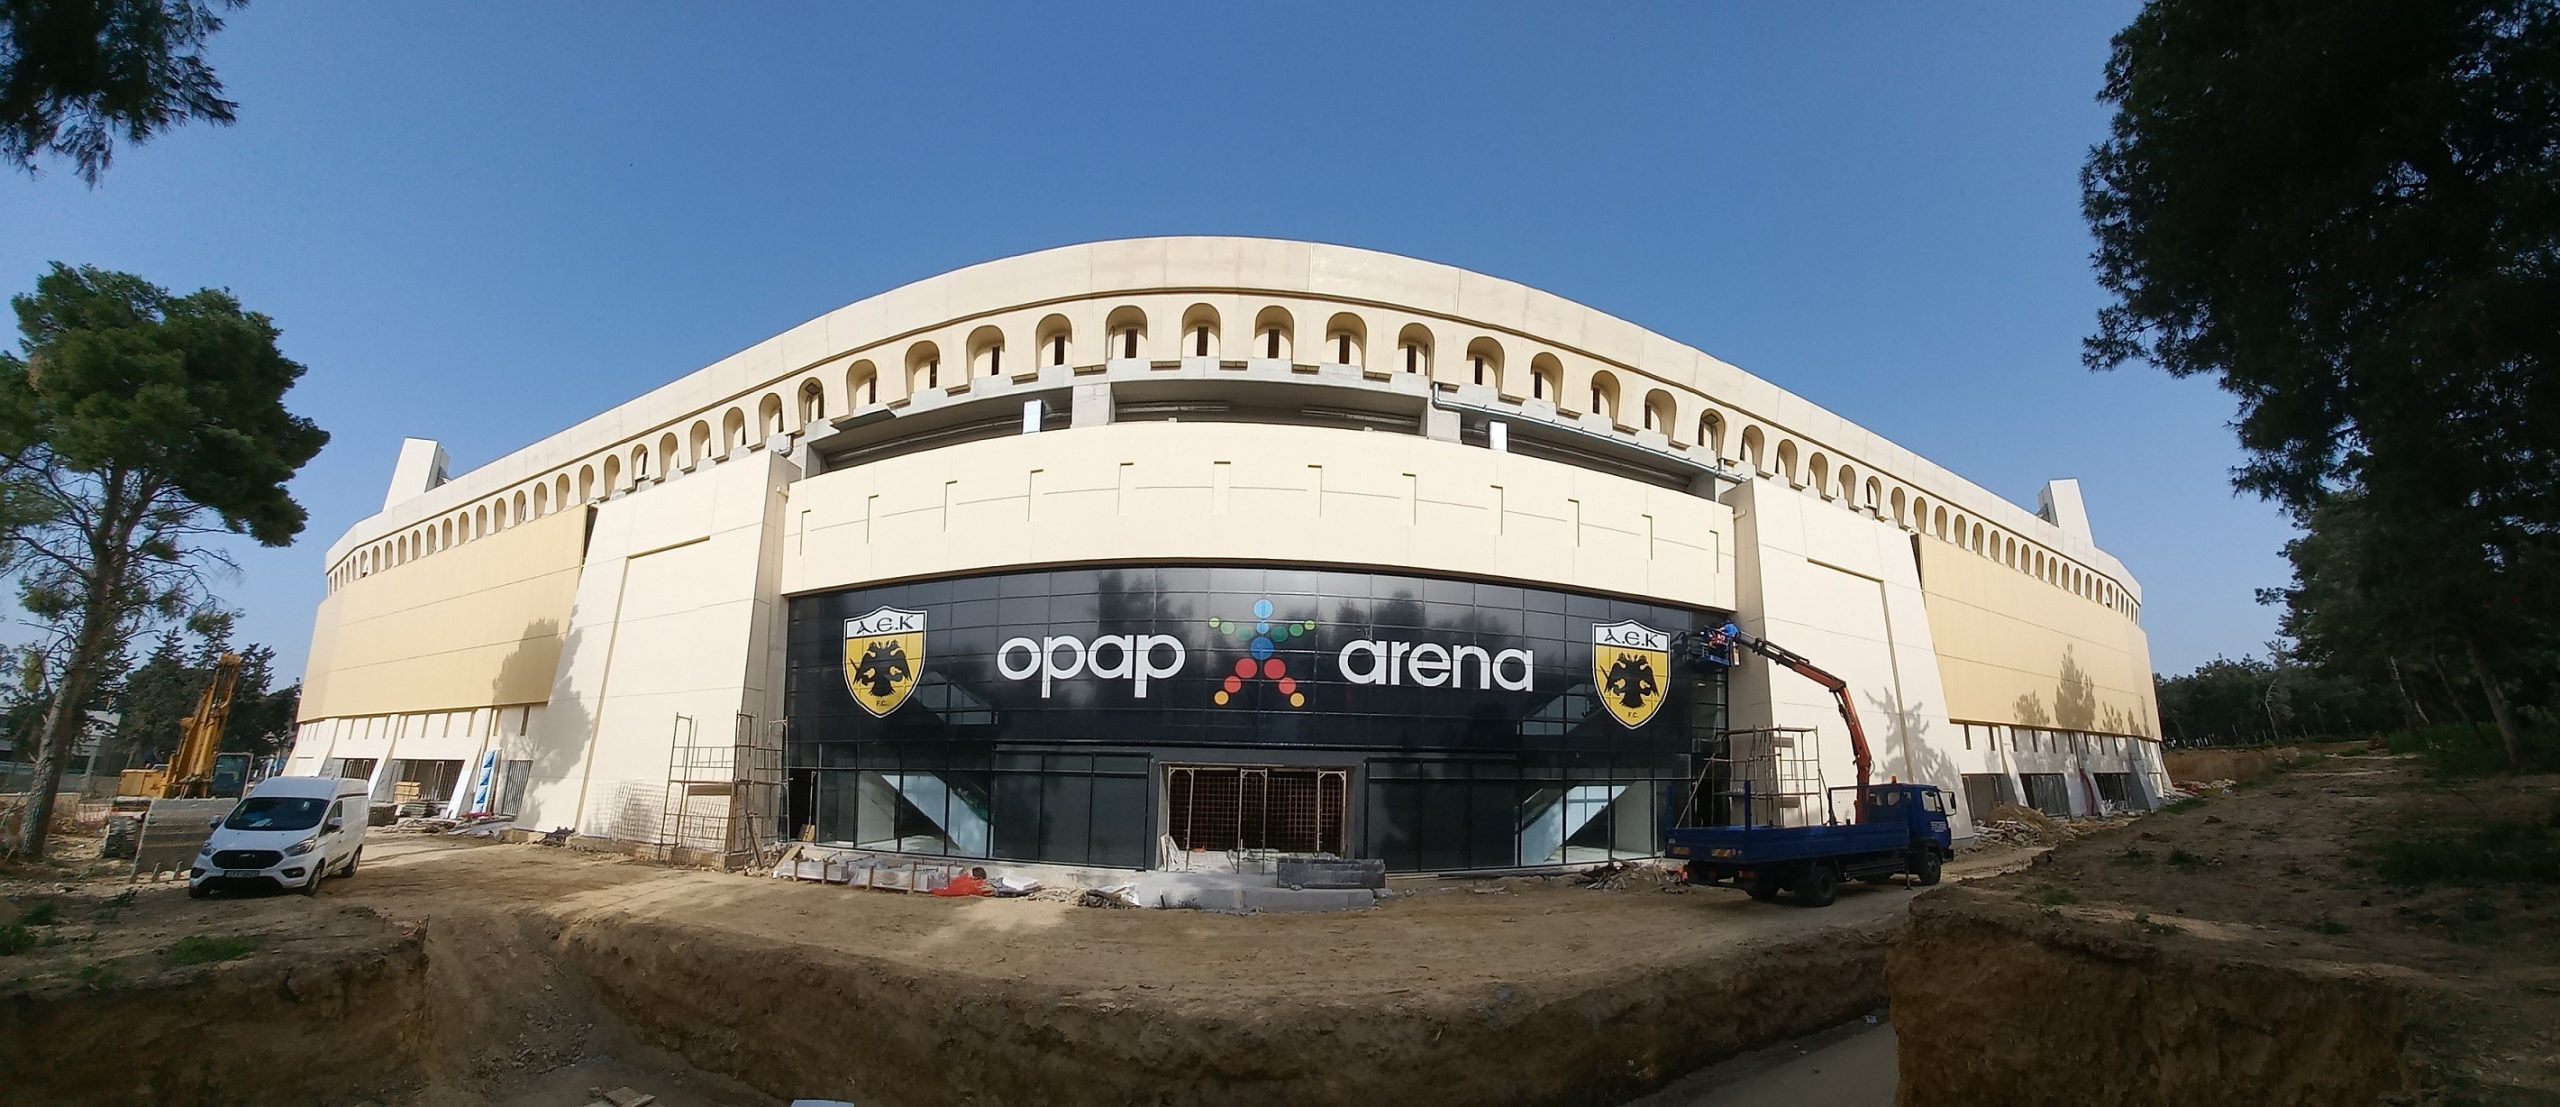 OPAP Arena: Πλησιάζει η ολοκλήρωση του γηπέδου – Ανυπομονησία από τους φίλους της ομάδας (βίντεο)